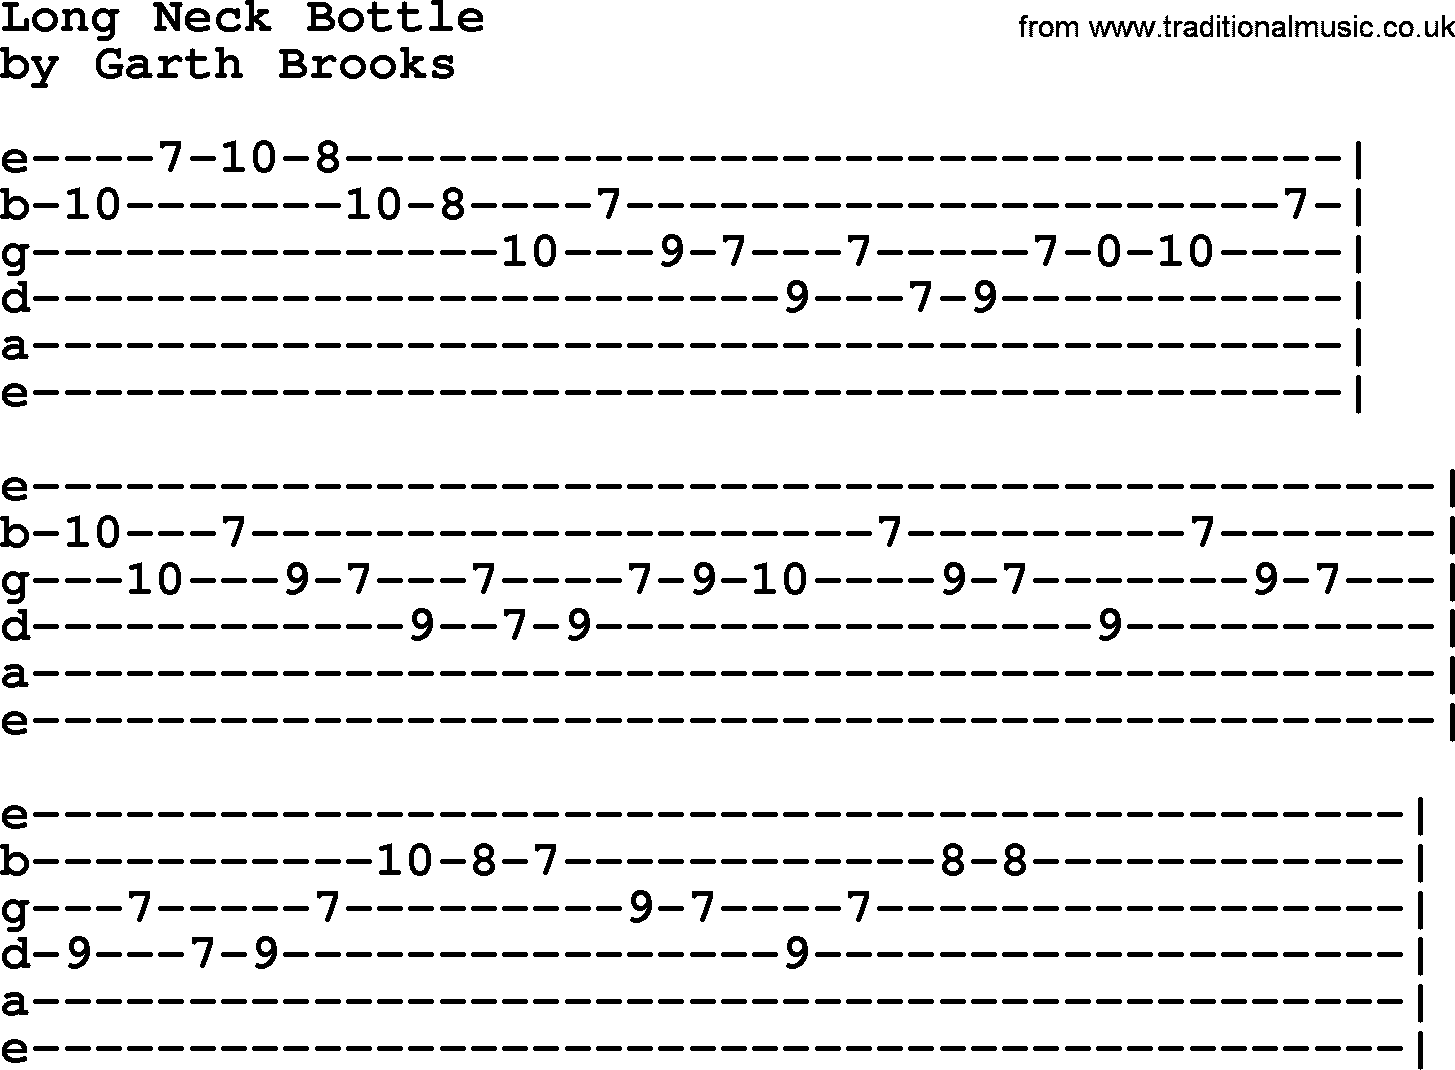 Garth Brooks song: Long Neck Bottle, lyrics and chords